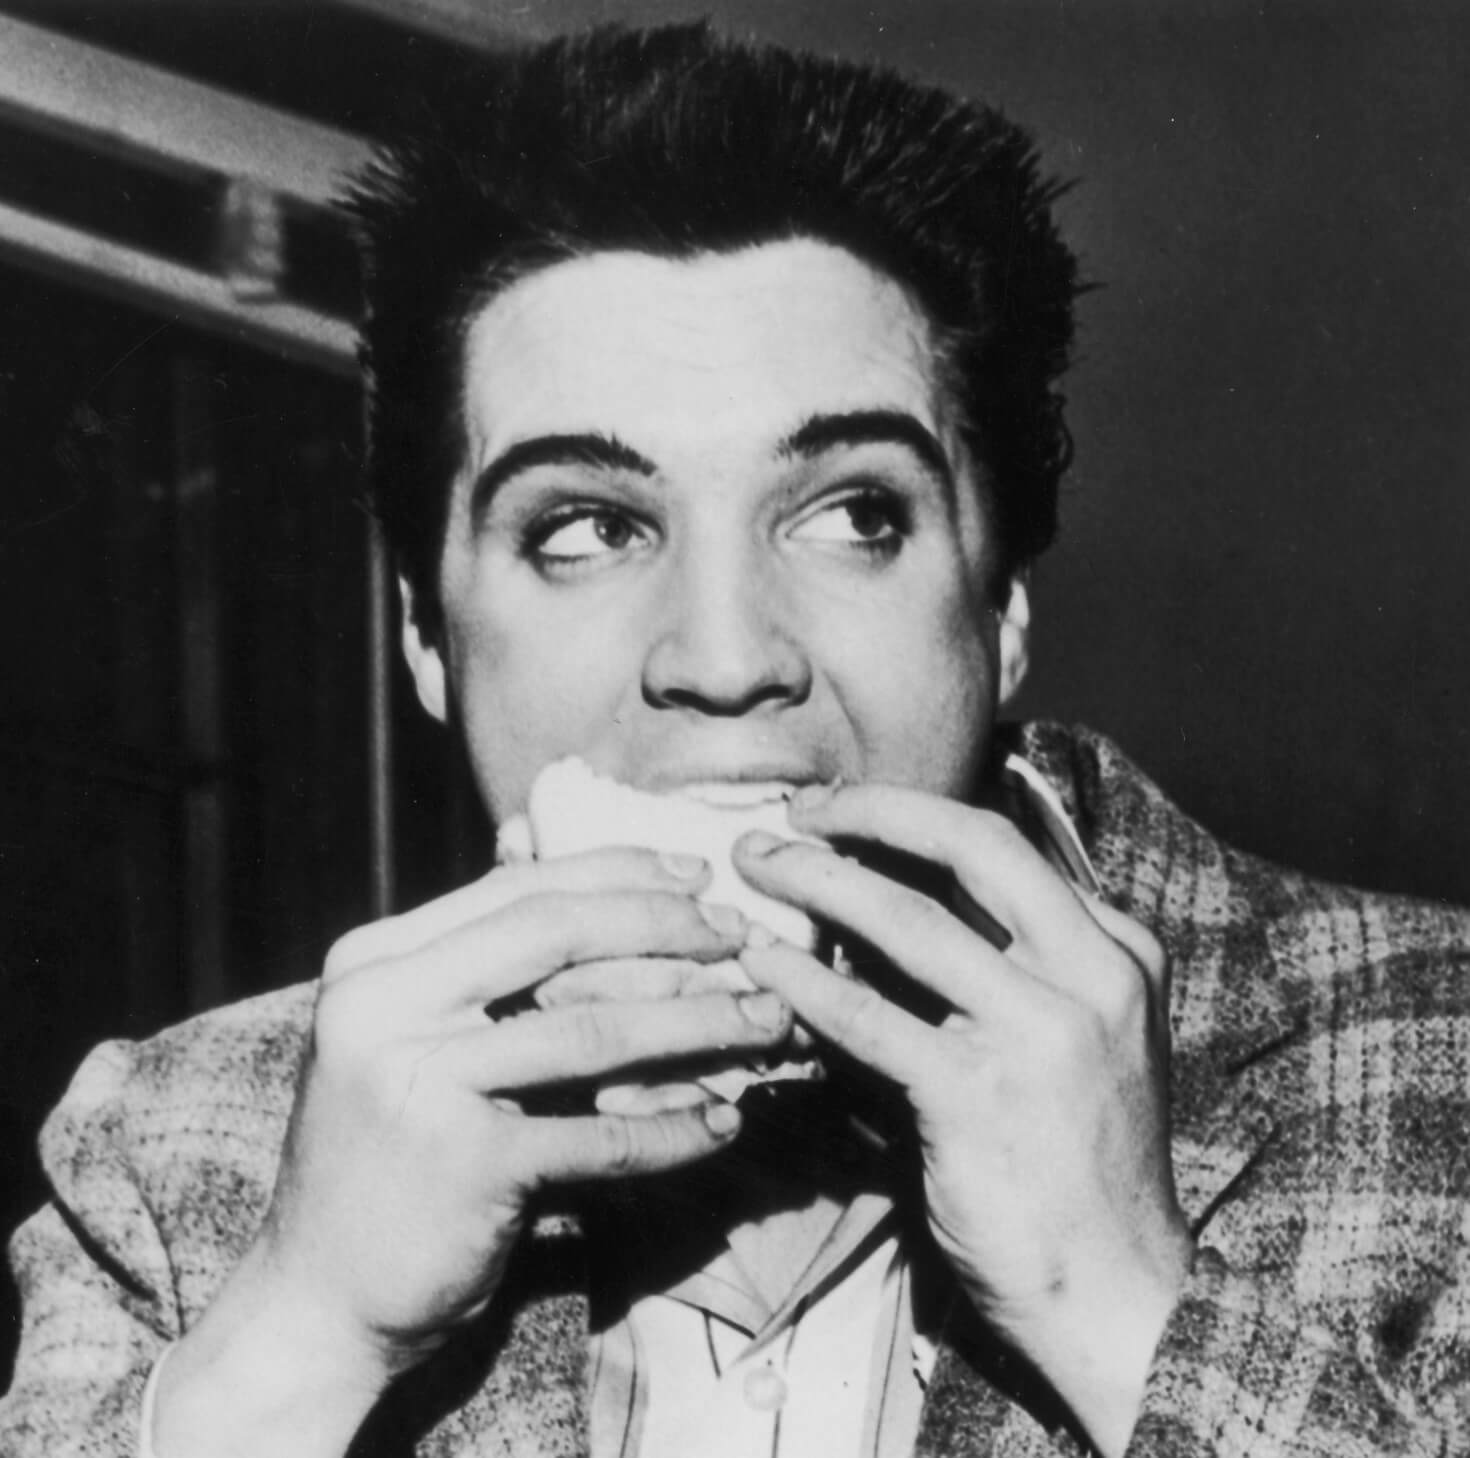 "Jailhouse Rock" singer Elvis Presley eating a sandwich